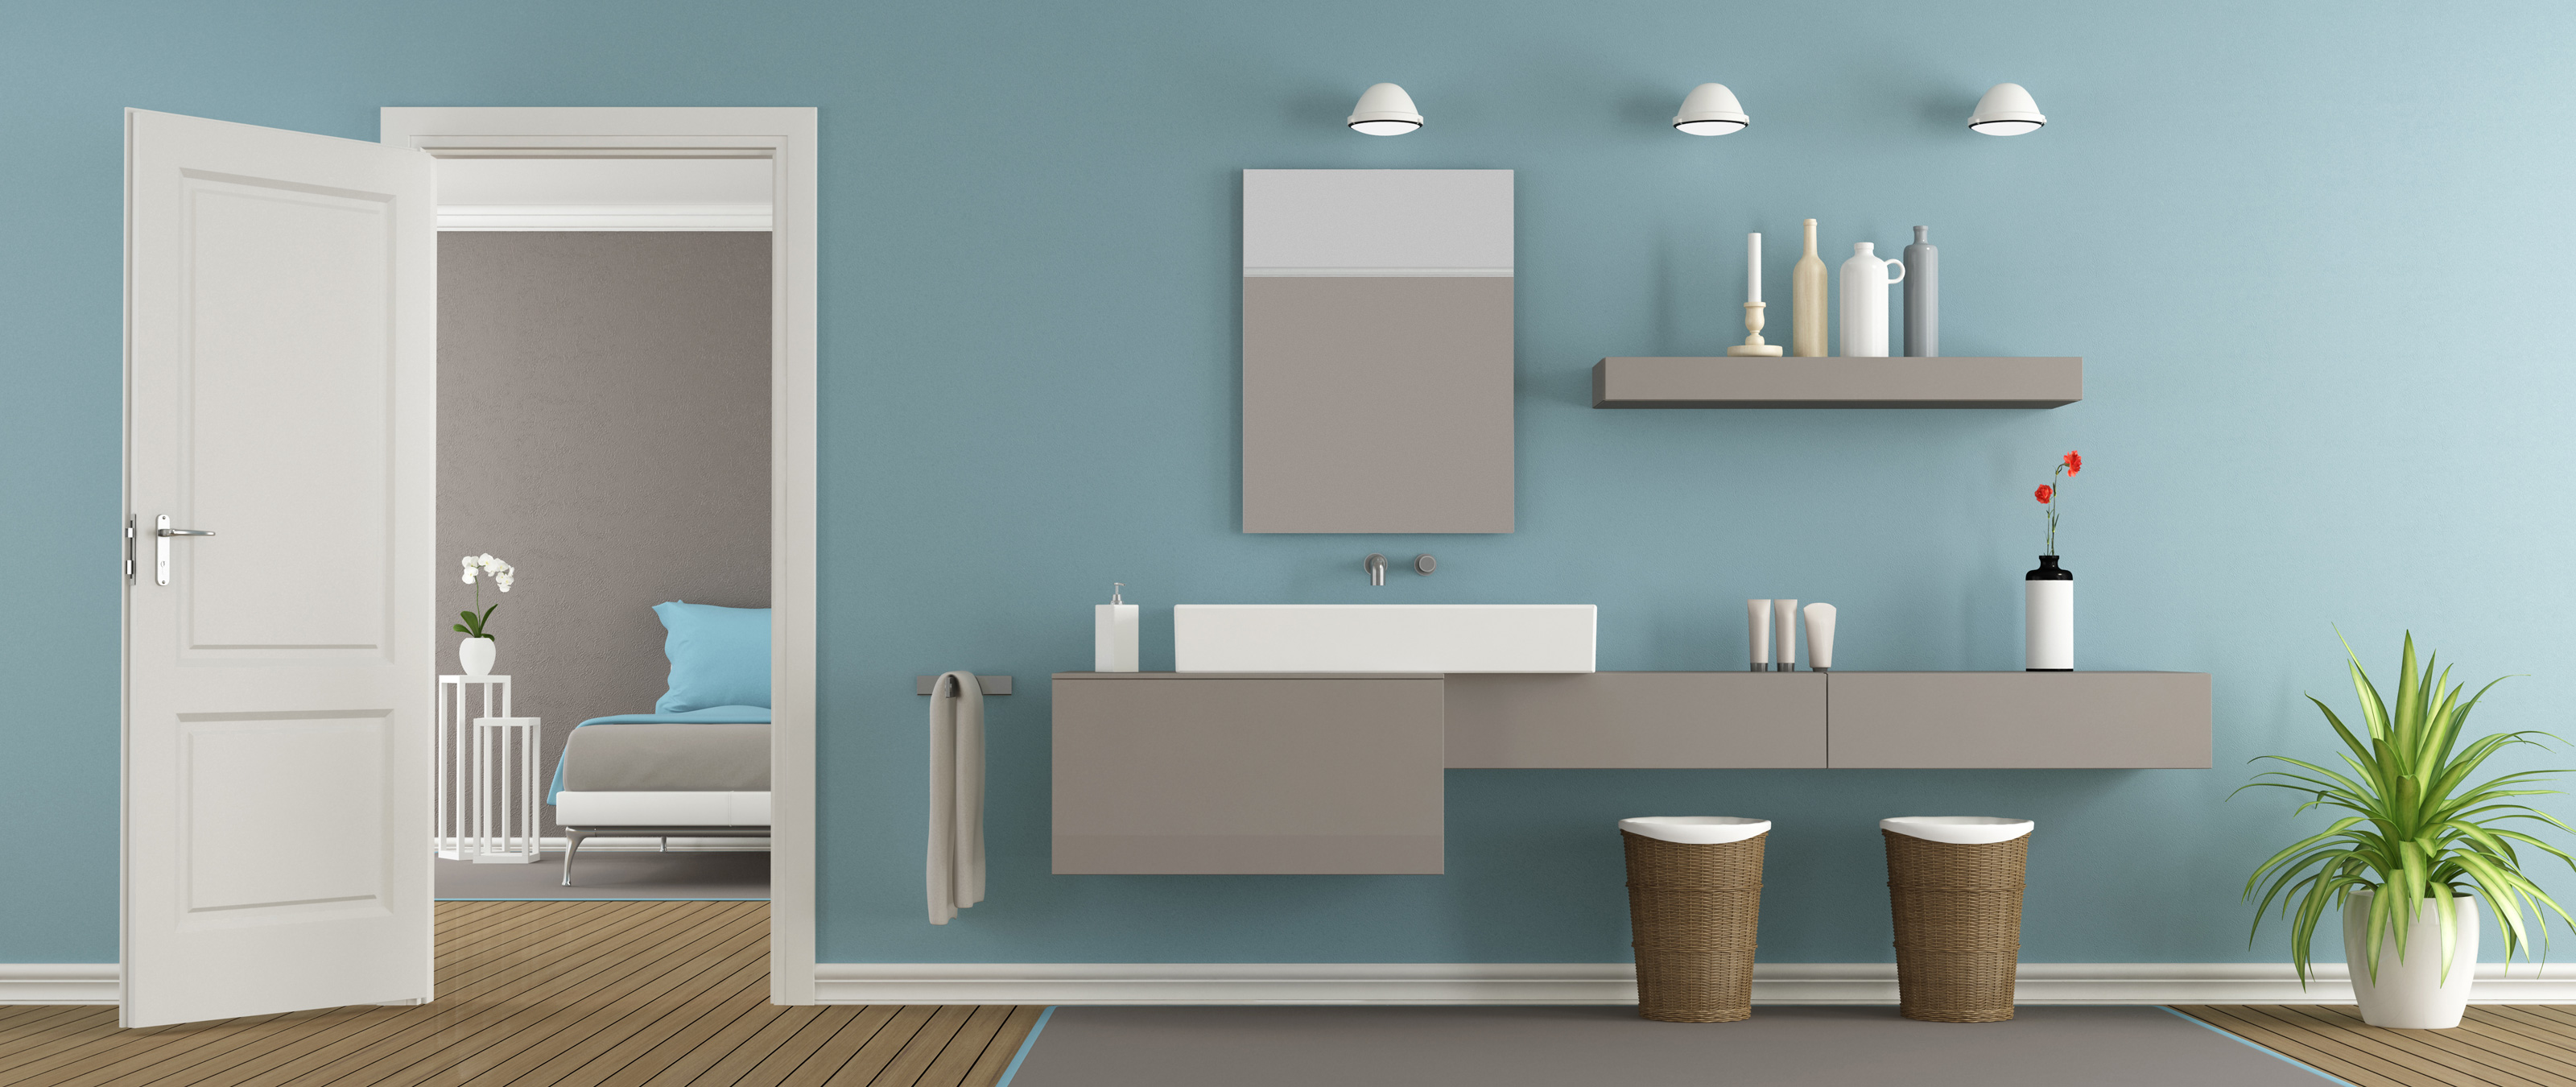 Spa Bathroom Design Part 3: Accessories - MJN and Associates Interiors